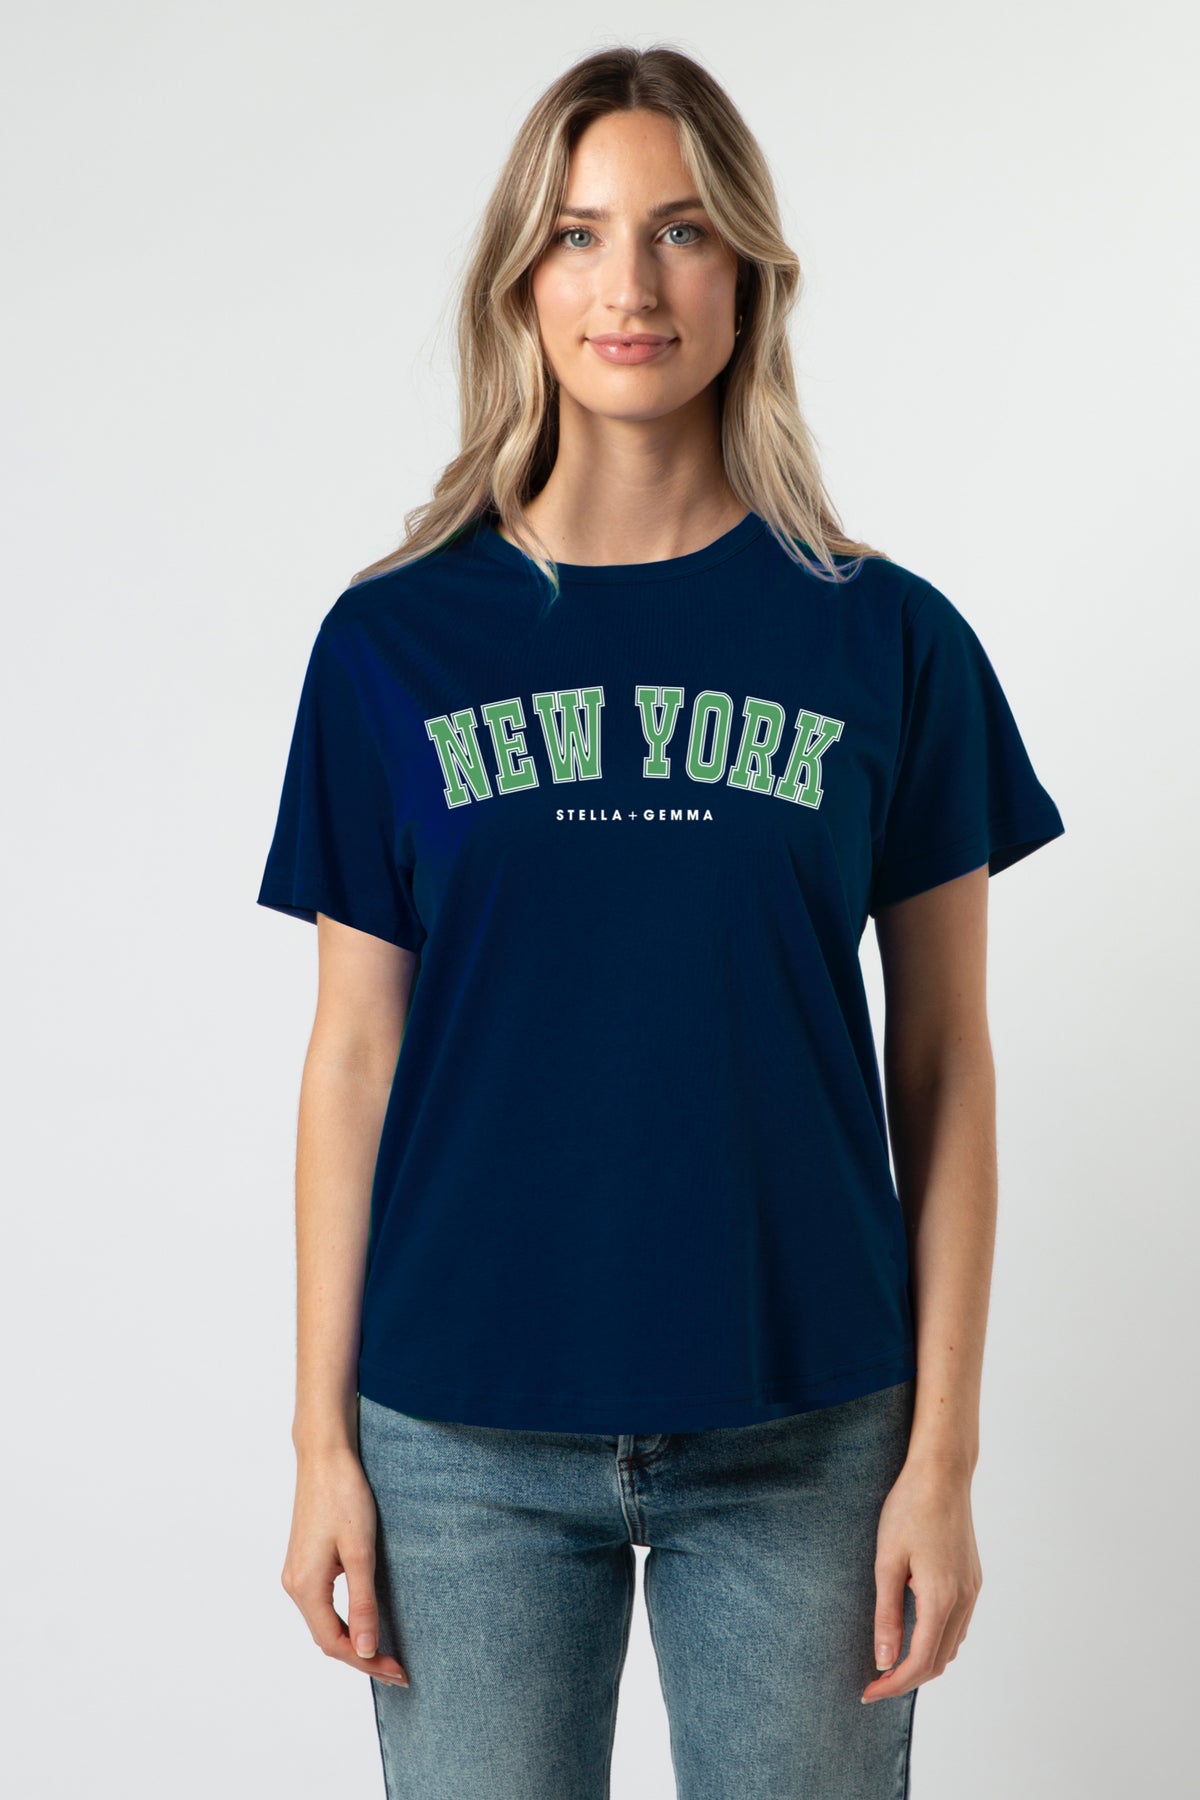 Ace T-Shirt New York Navy